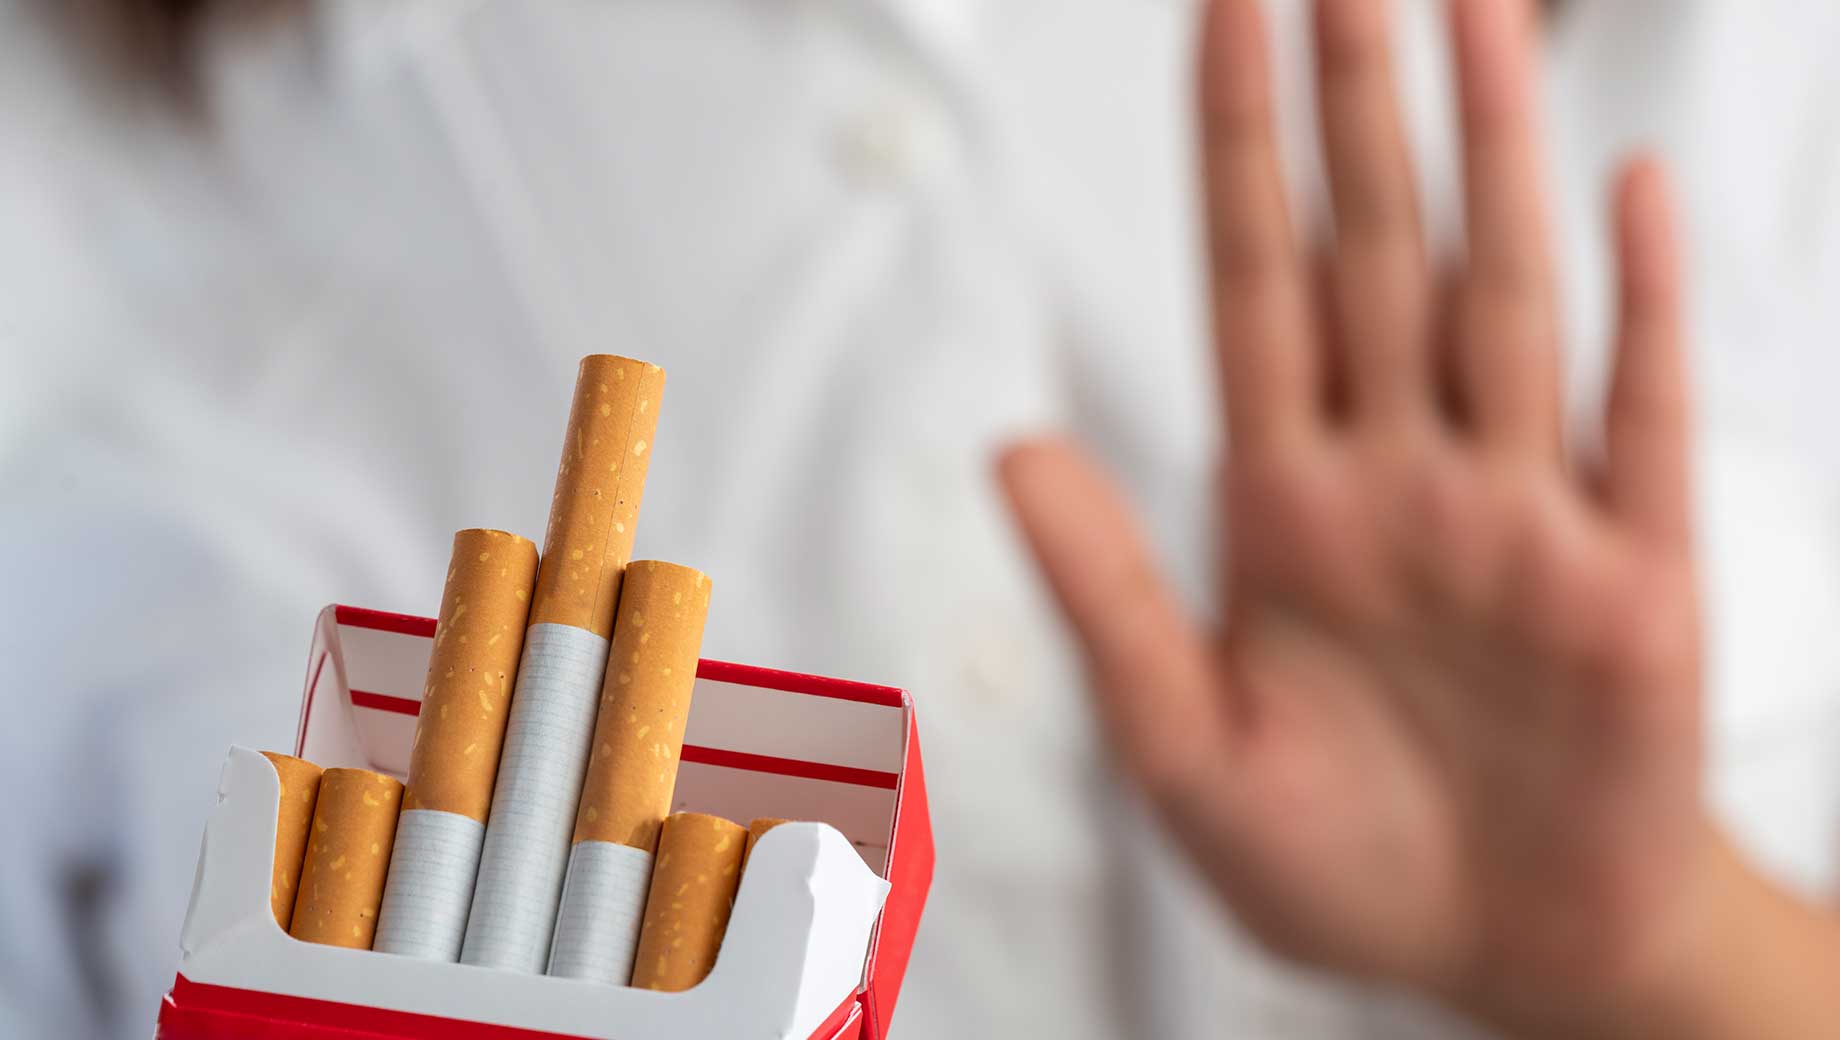 Cigarette Smoking Rates Down Sharply Among U.S. Young Adults